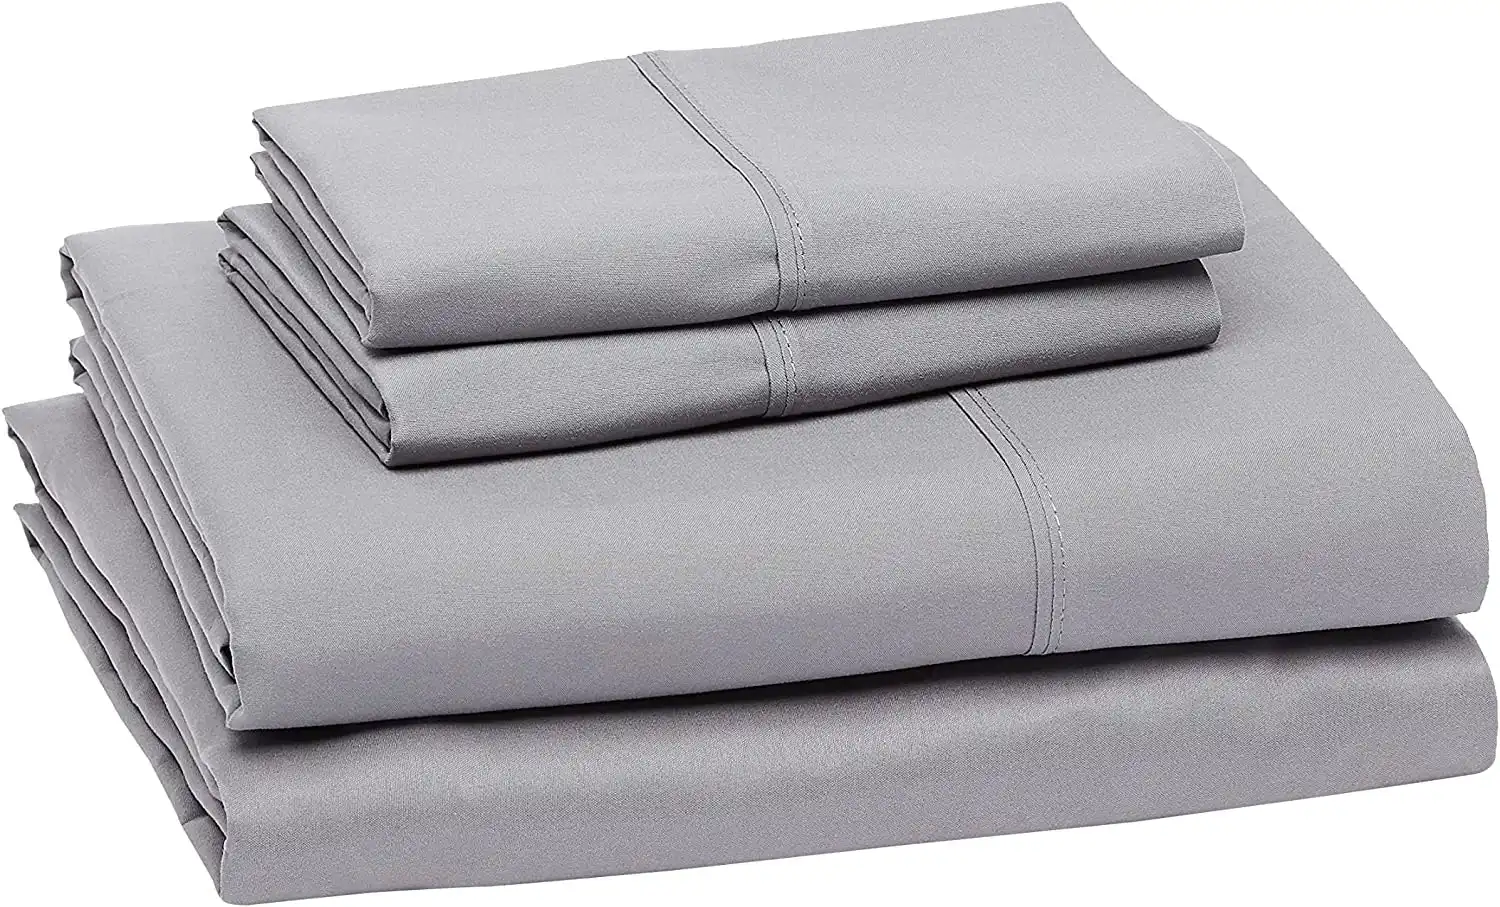 King Size Microfiber Bed Sheet Set Lightweight Super Soft Easy Care, 36cm Deep Pockets Dark Gray